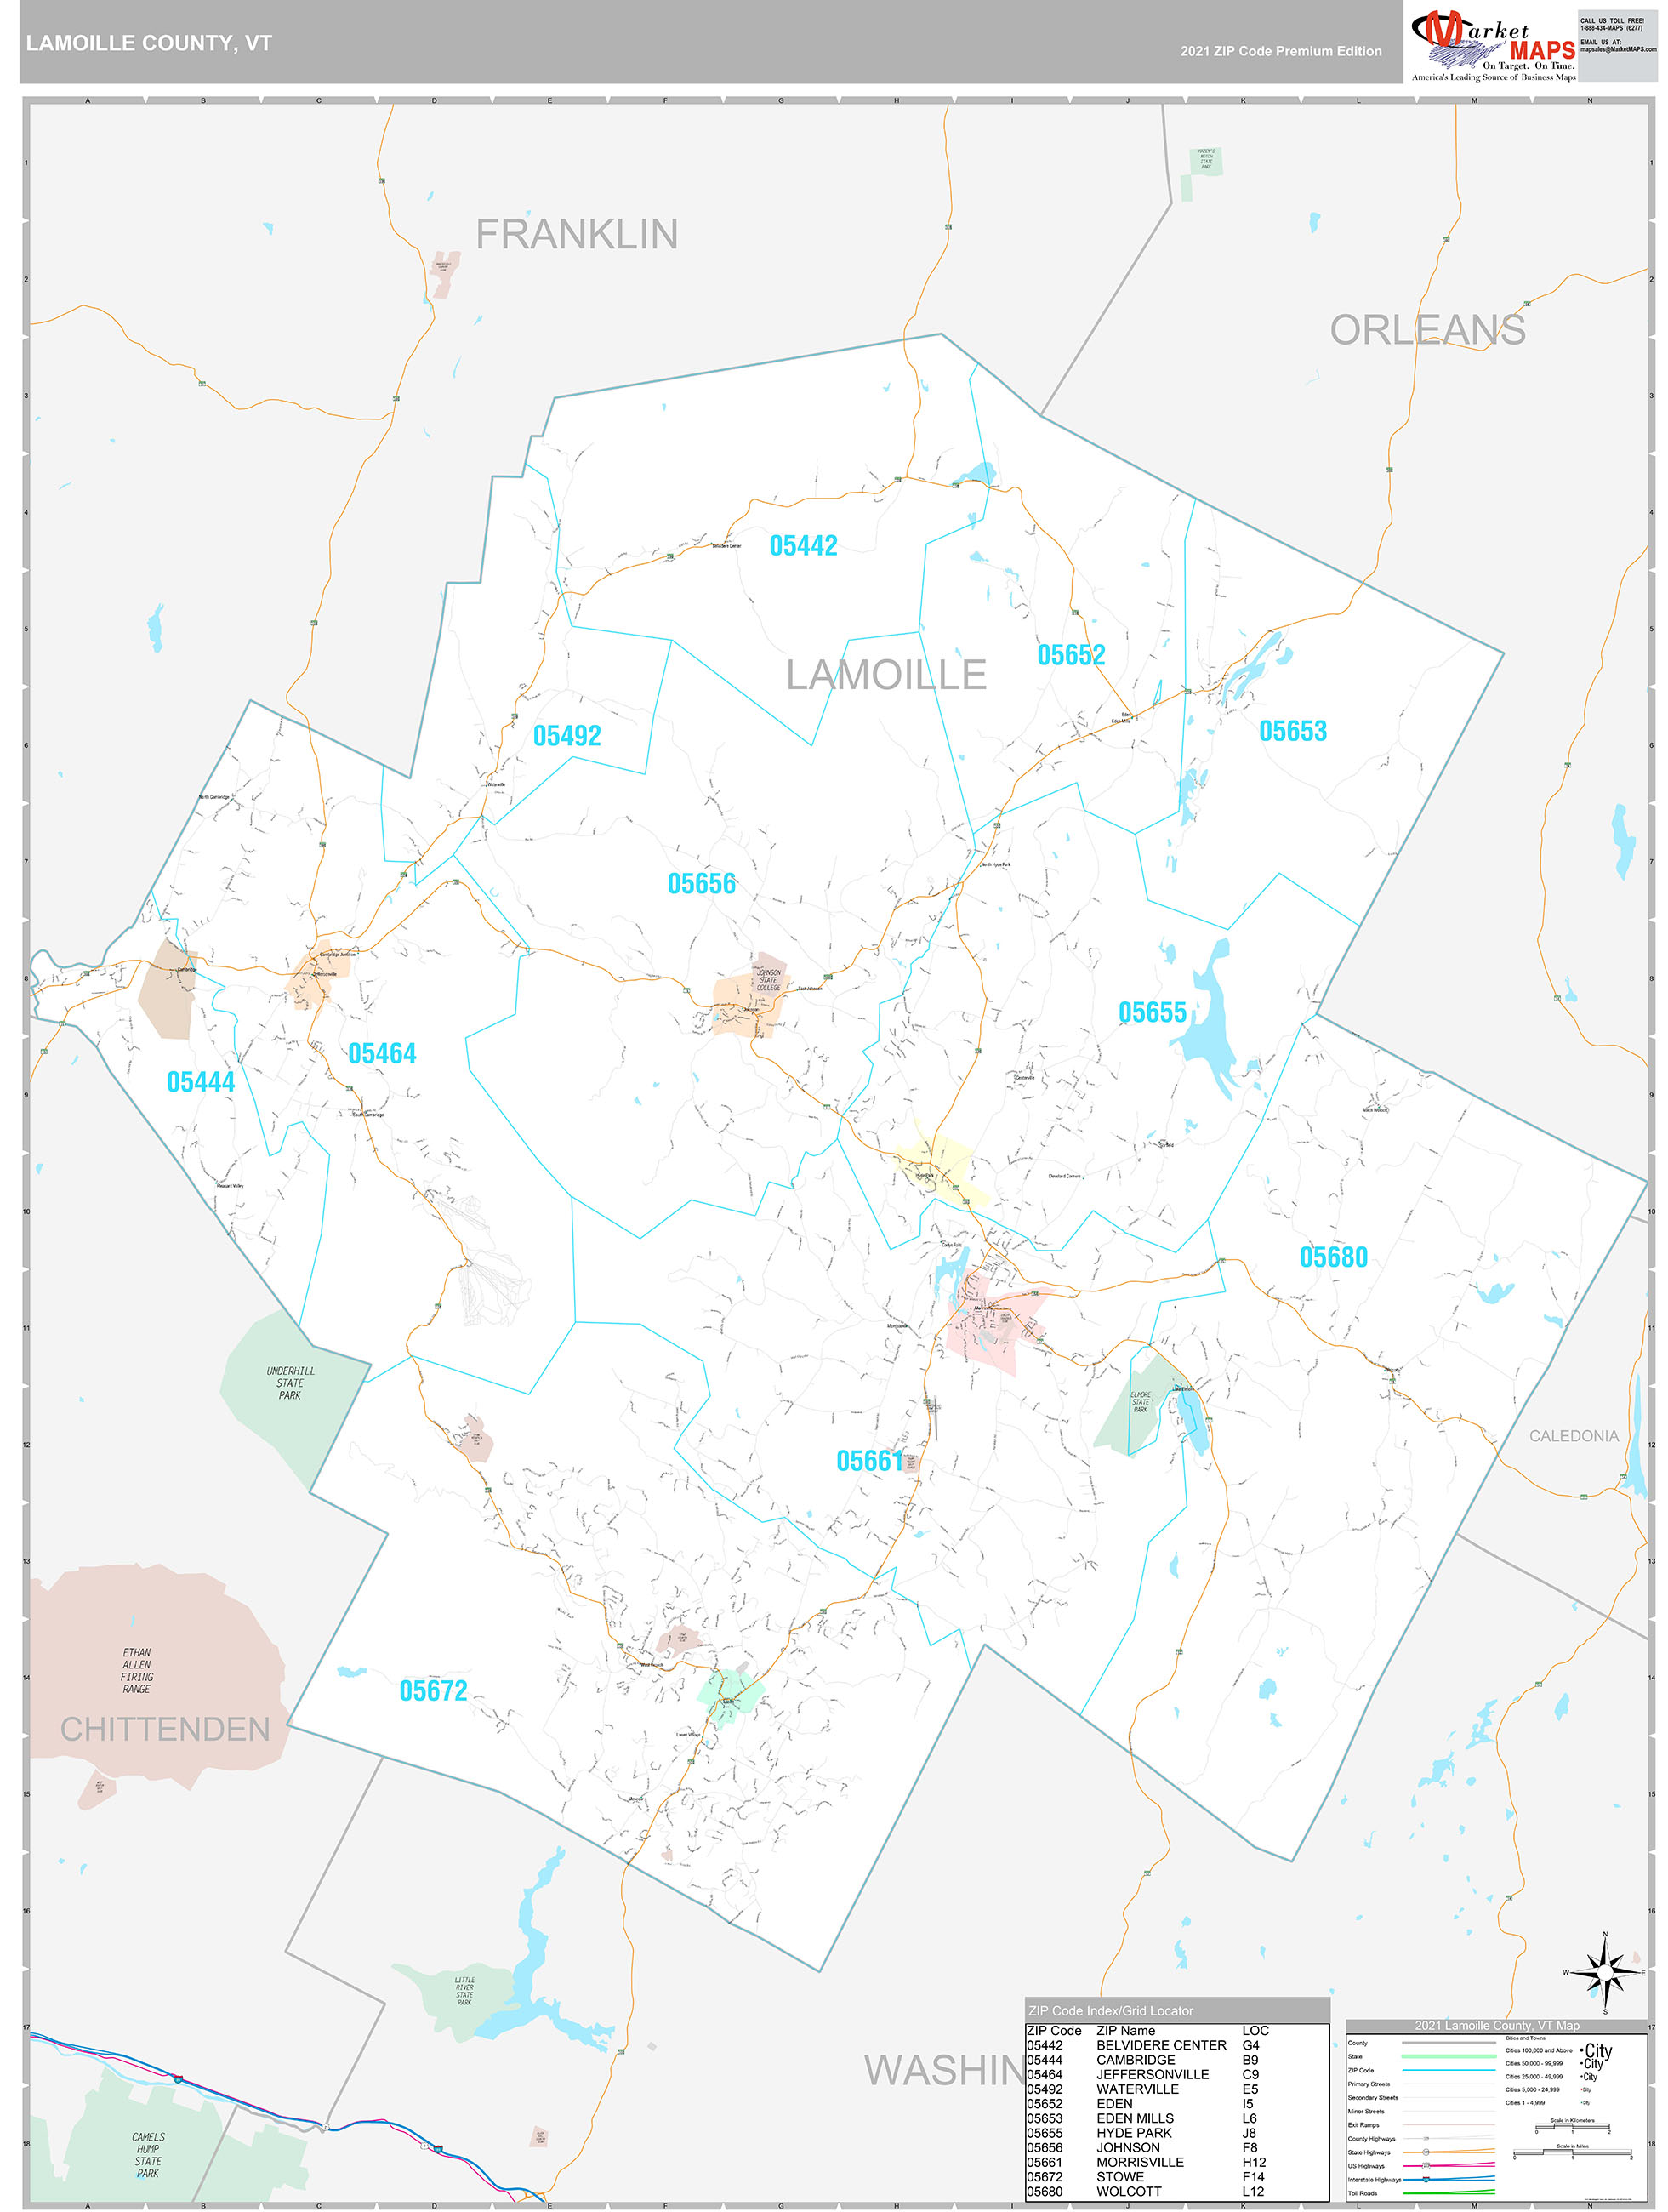 Lamoille County, VT Wall Map Premium Style by MarketMAPS MapSales